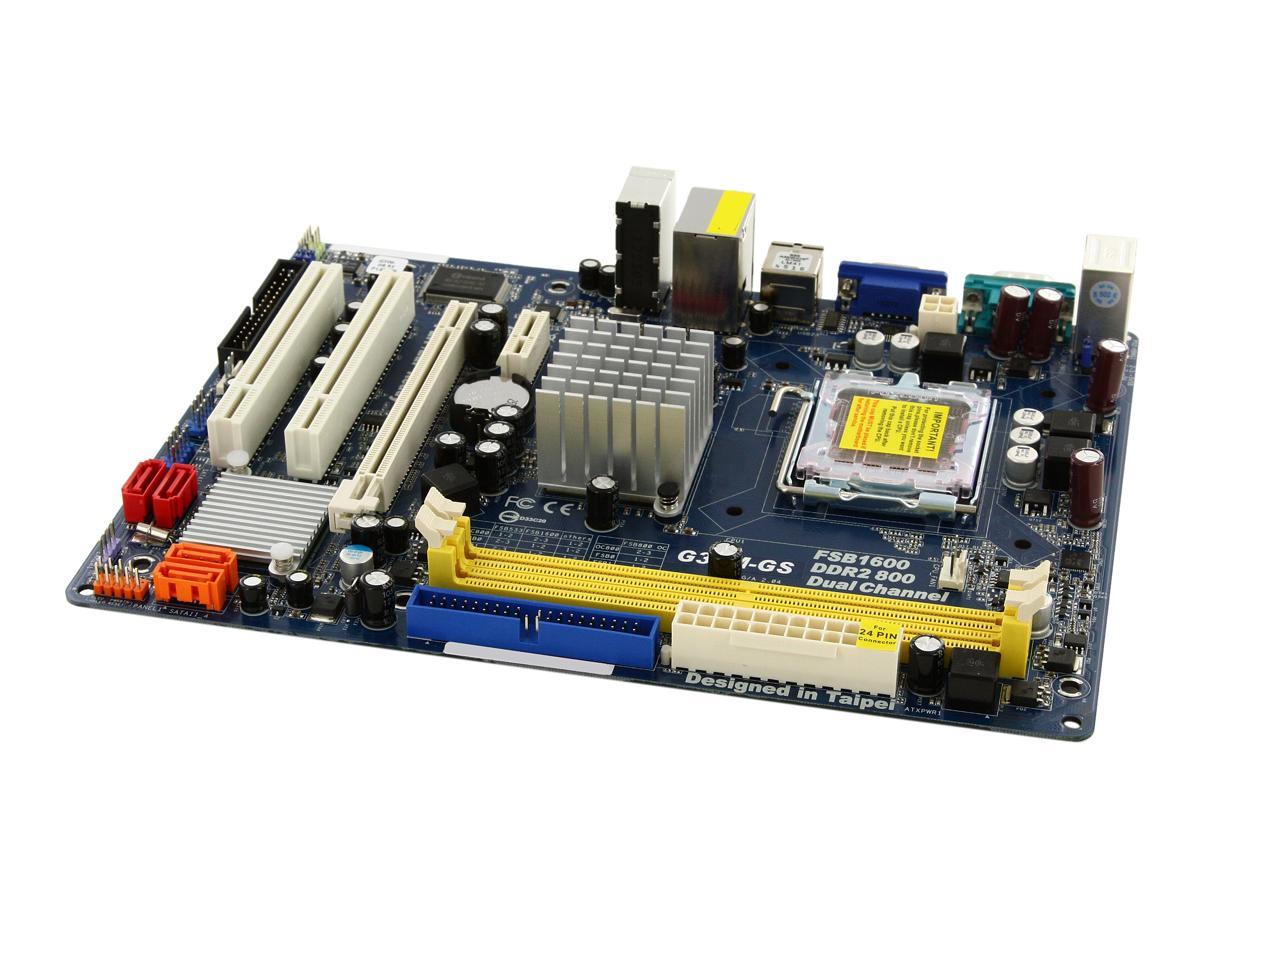 A-Tech 1GB Stick for AsRock G Series G31DE G31M-GS G31M-GS R2 G31M-S G31M-VS G31M-VS2 G41C-GS G41C-S G41C-S G41C-VS G41M-GS G41MH-GE DIMM DDR2 Non-ECC PC2-6400 800MHz RAM Memory 